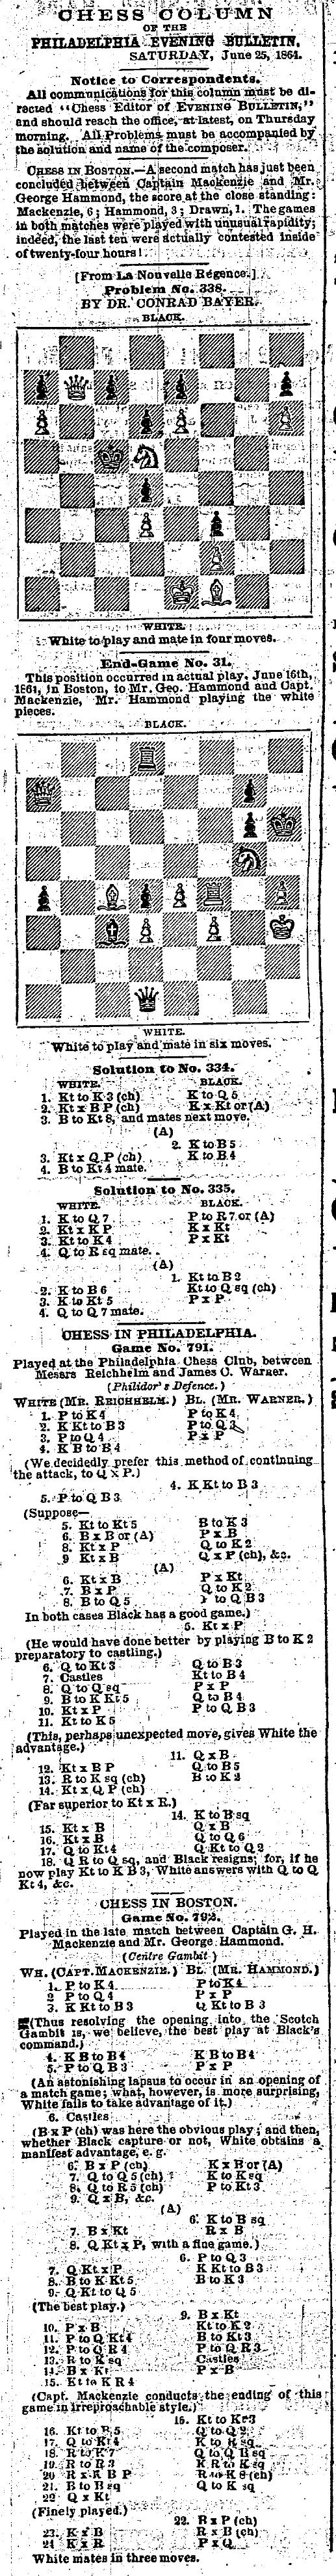 1864.06.25-01 Philadelphia Daily Evening Bulletin.jpg